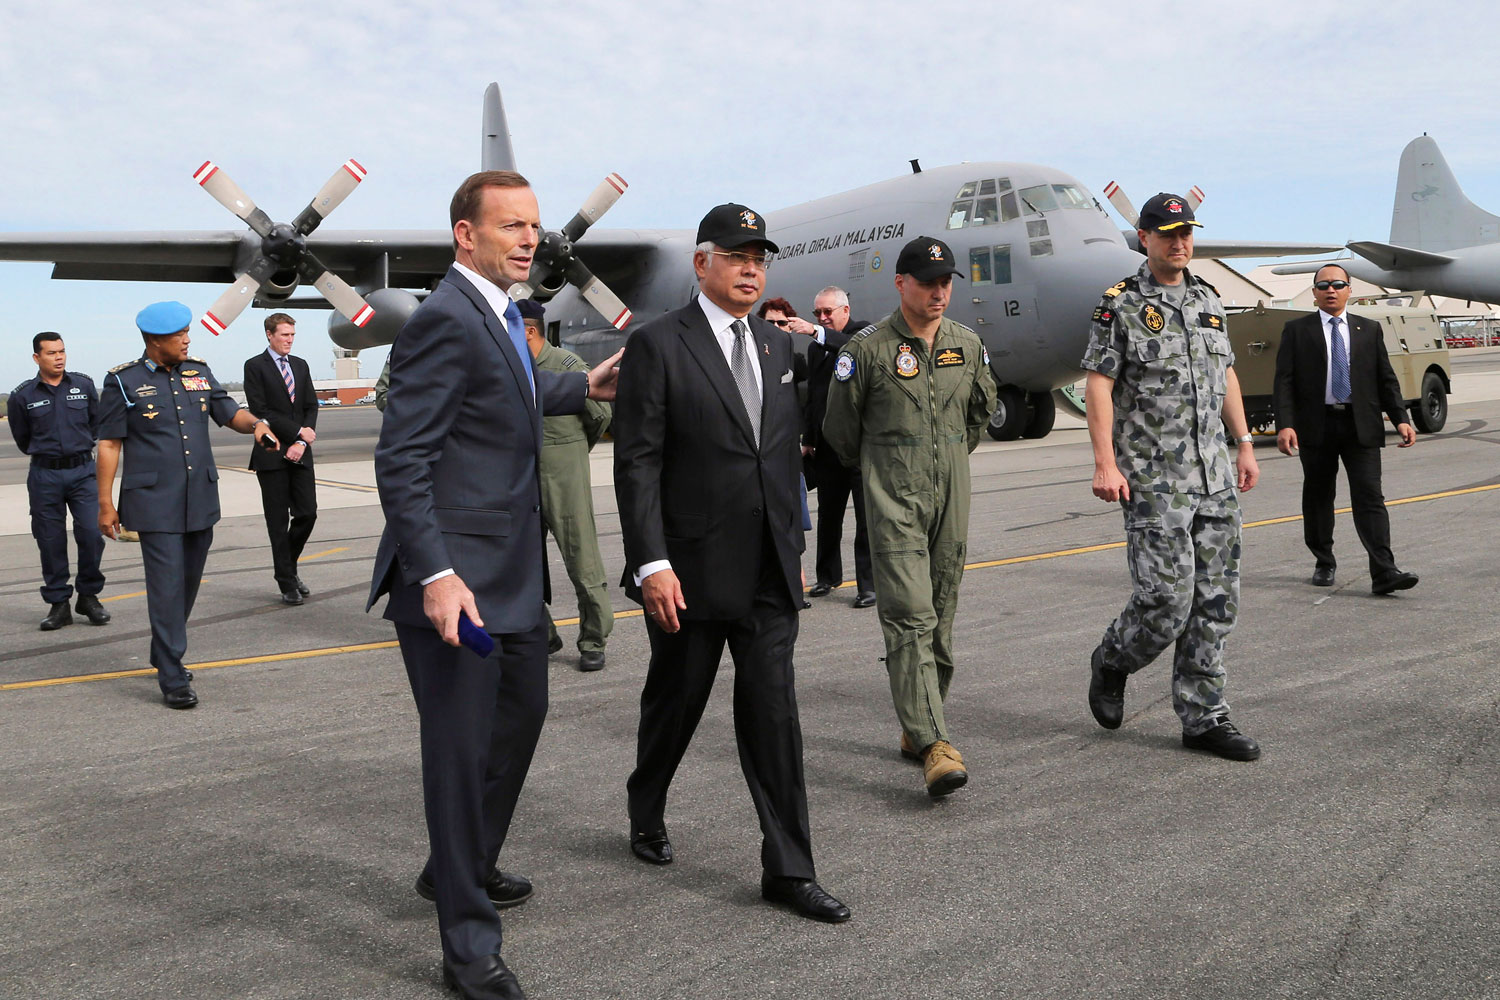 Australia's Prime Minister Tony Abbott, left, and Malaysia's Prime Minister Najib Razak tour the tarmac of Royal Australian Air Force Base Pearce near Perth on April 3, 2014 (Rob Griffith—Reuters)